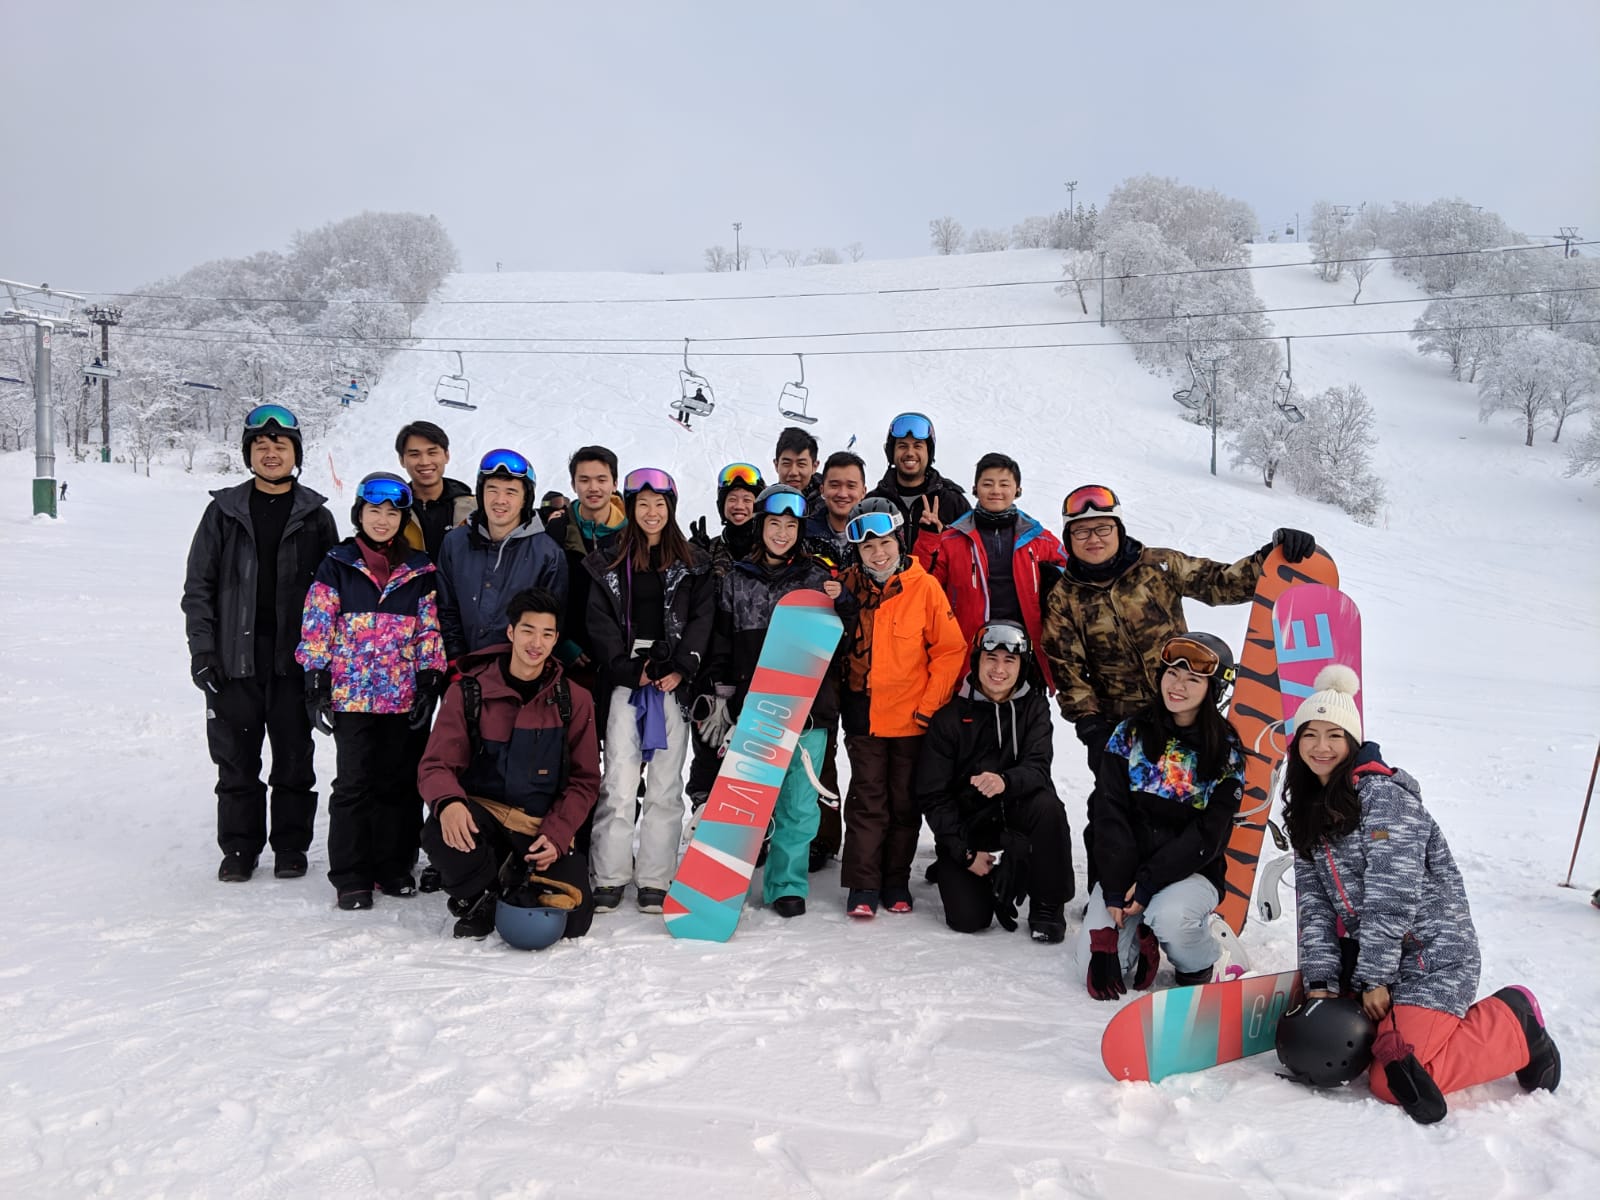 The Ride Side Ski Snowboard Travel Company